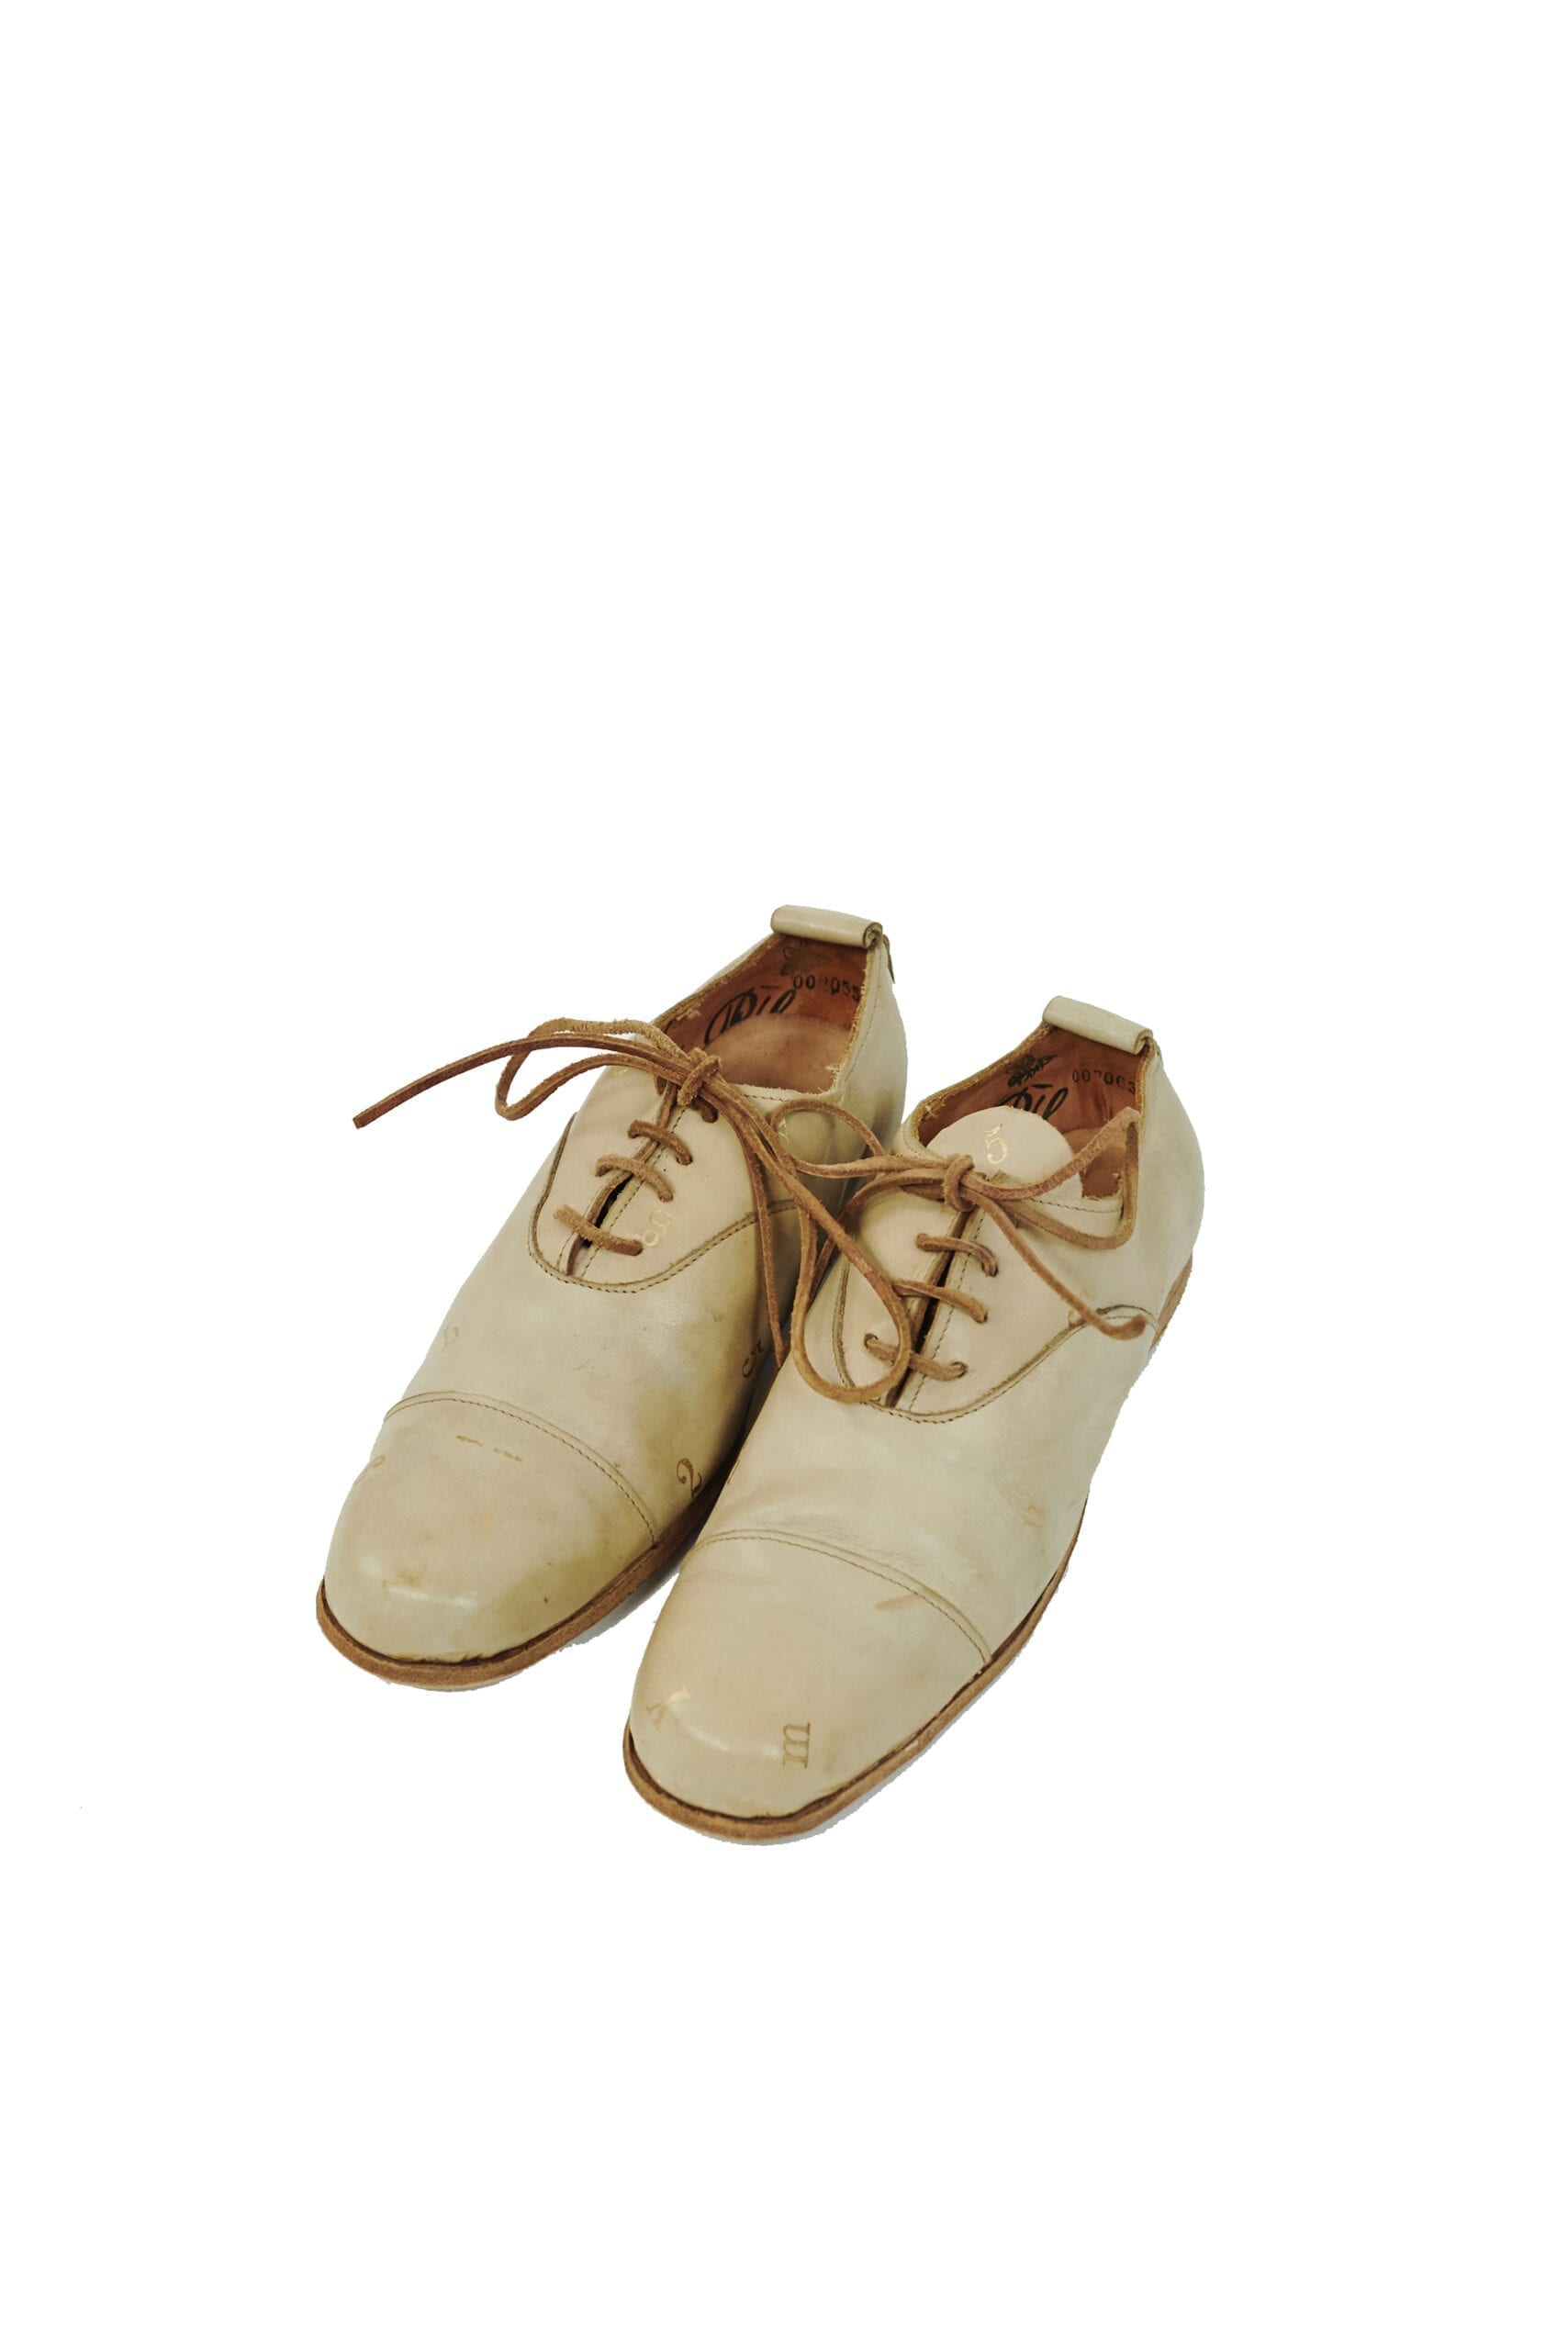 paul harnden shoes